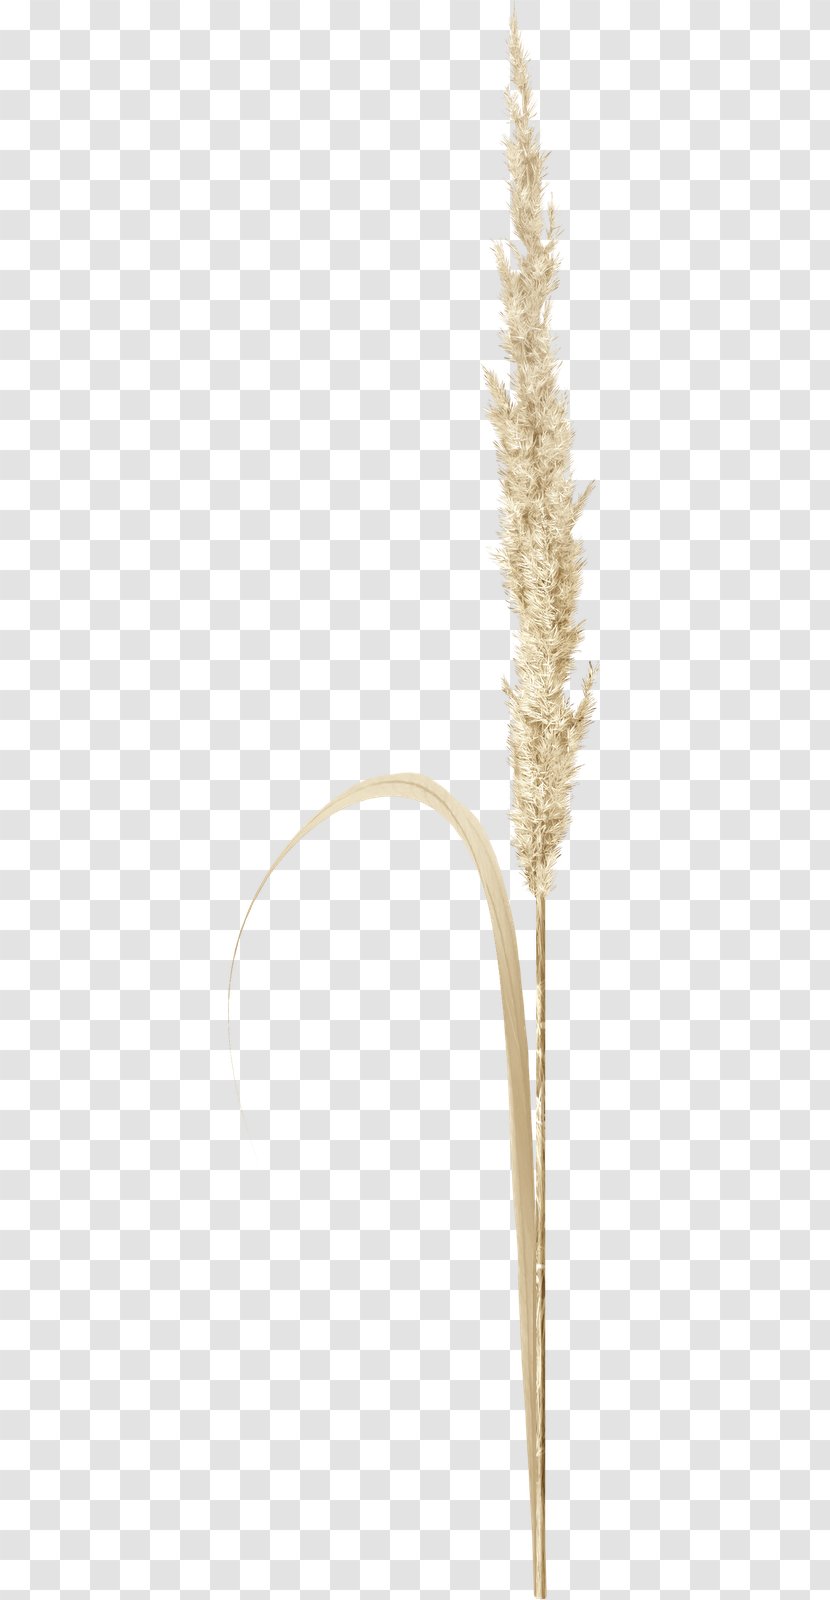 Grasses Cereal Grain Food Family Transparent PNG